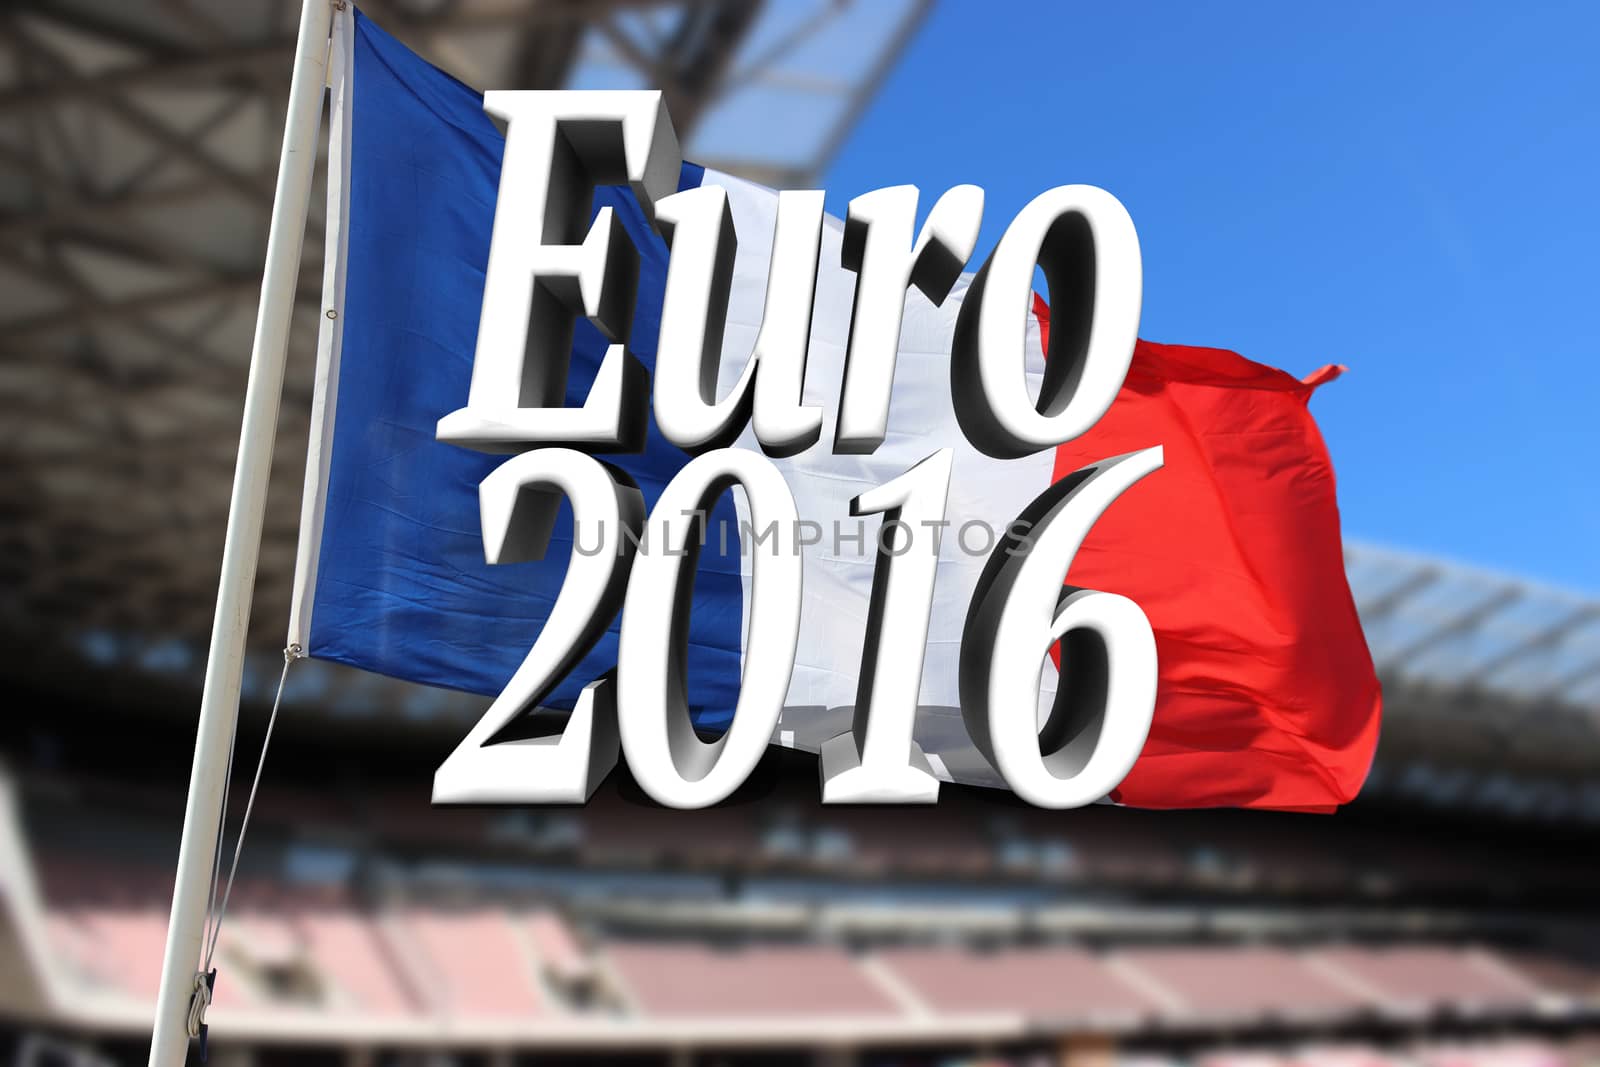 Euro 2016 France Football Championship by bensib